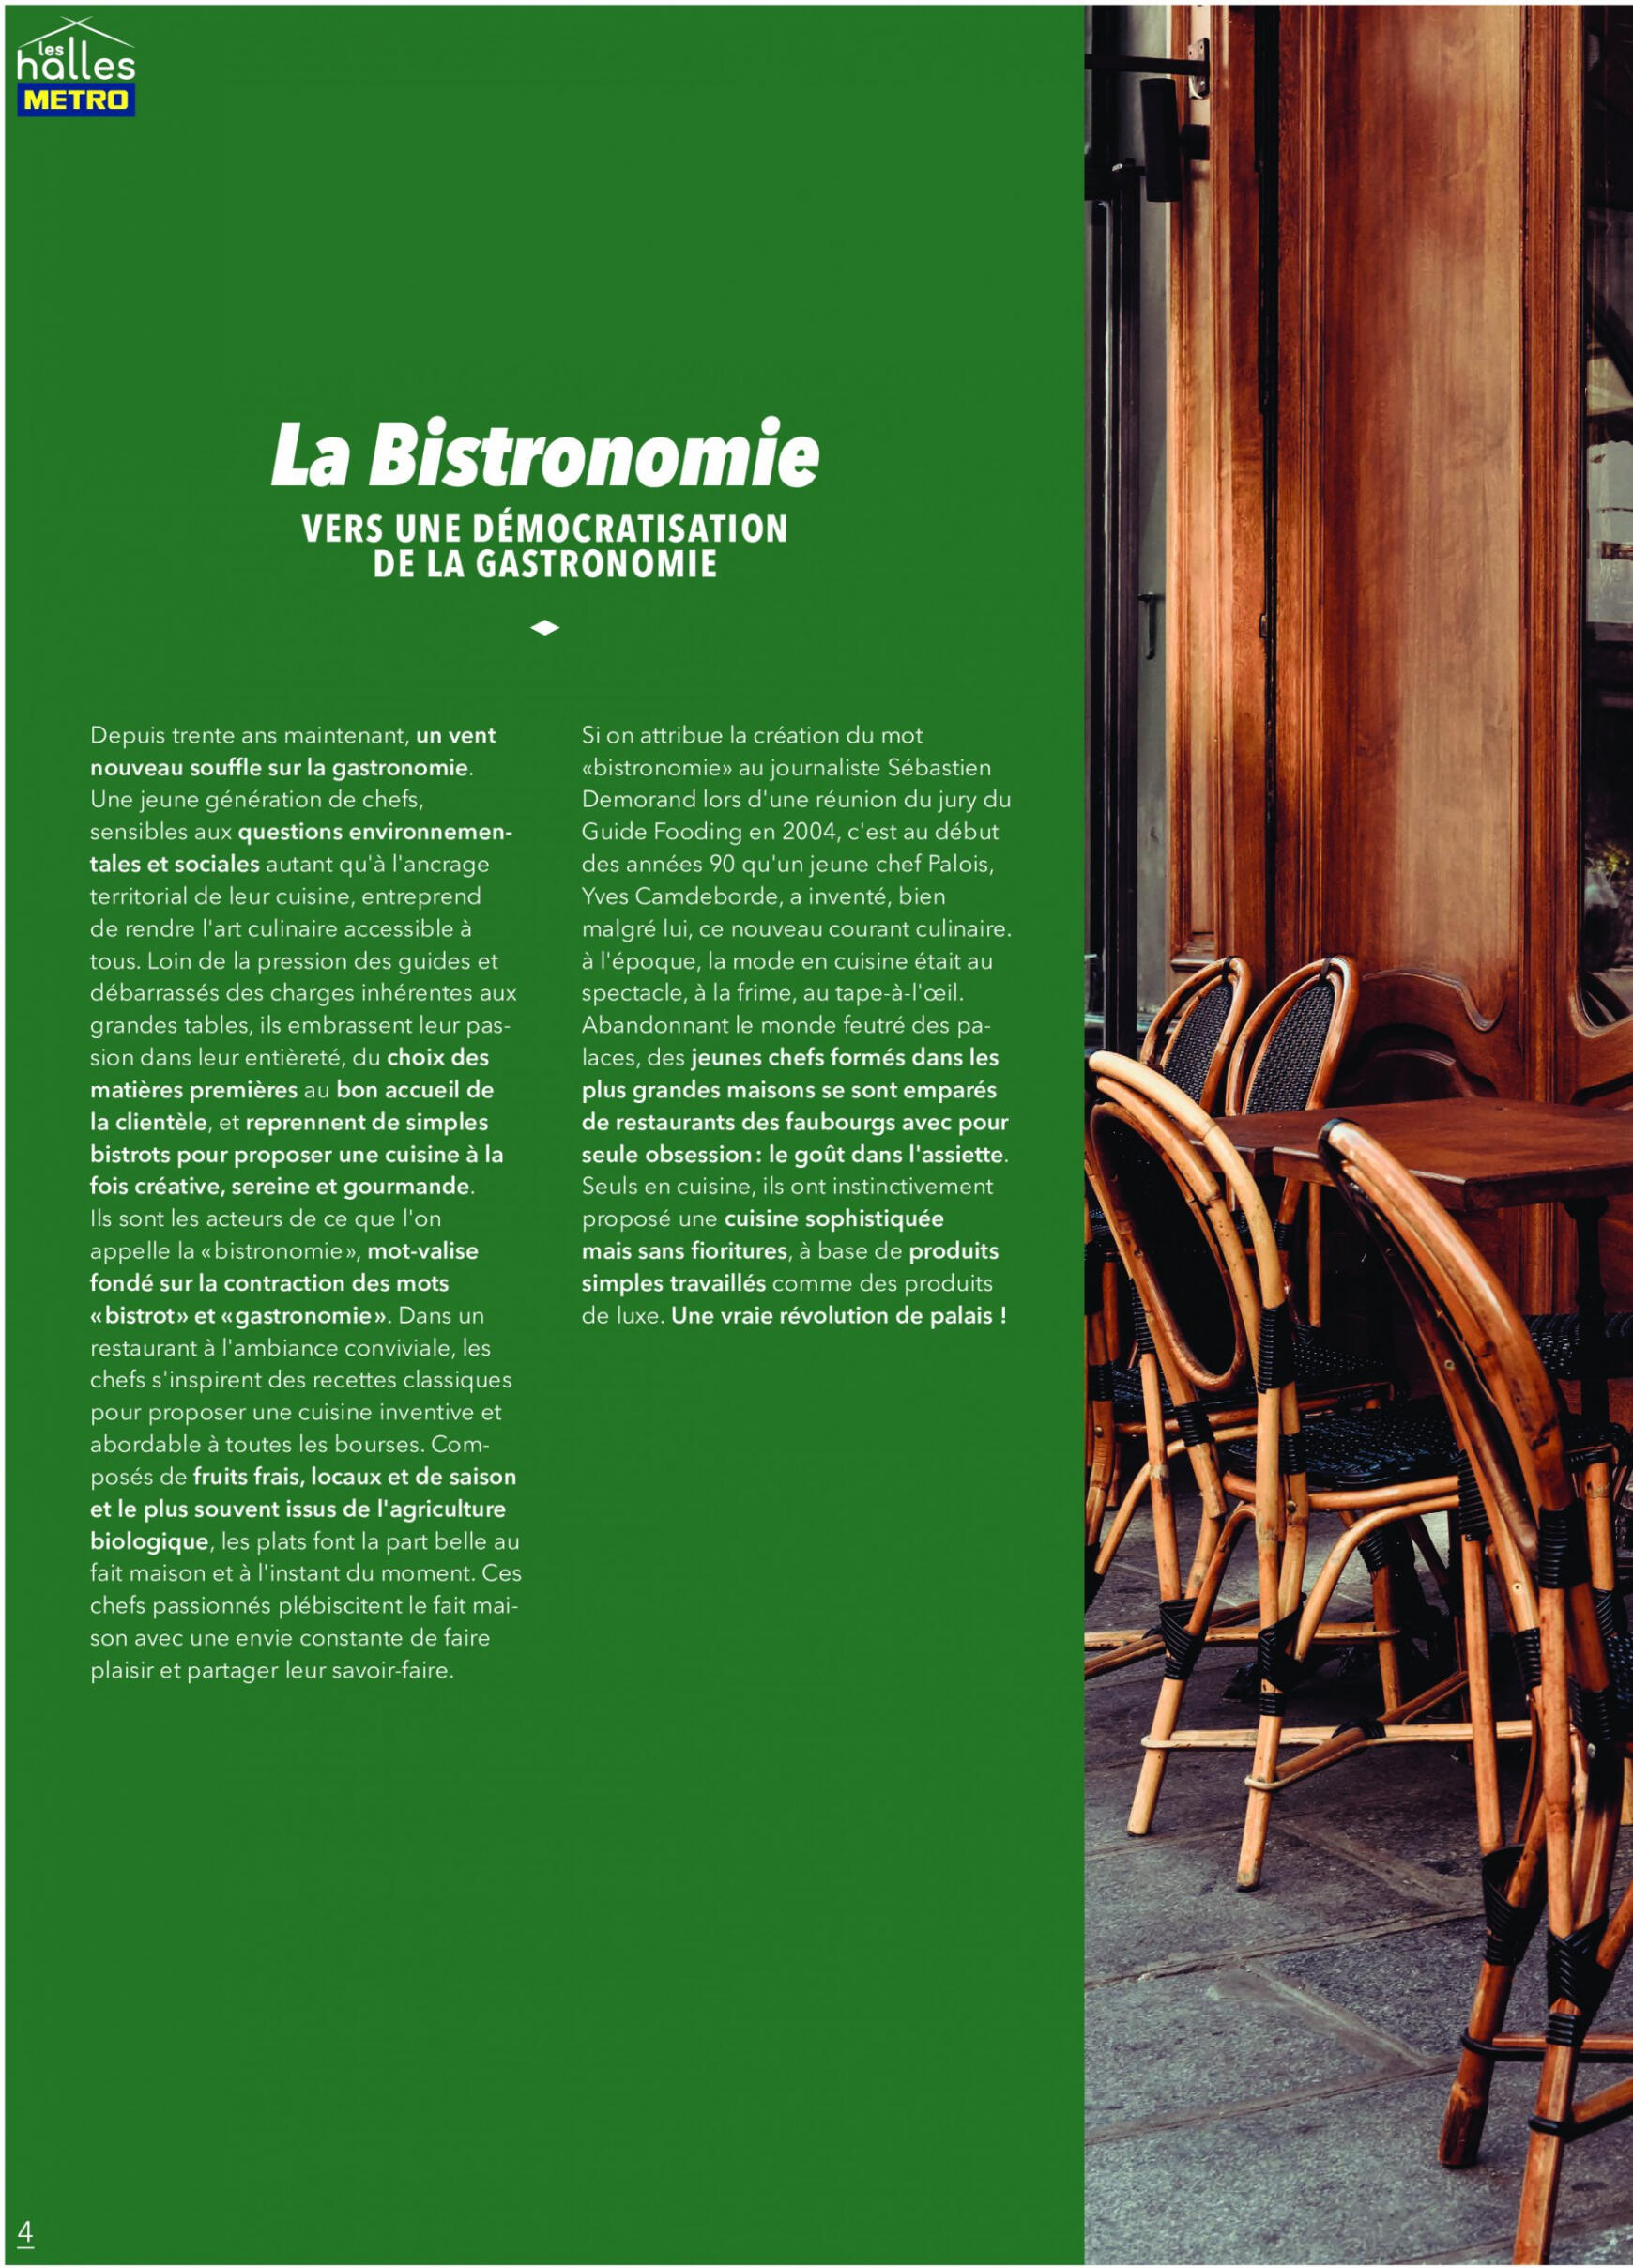 metro - Metro - Guide bistronomie - page: 4